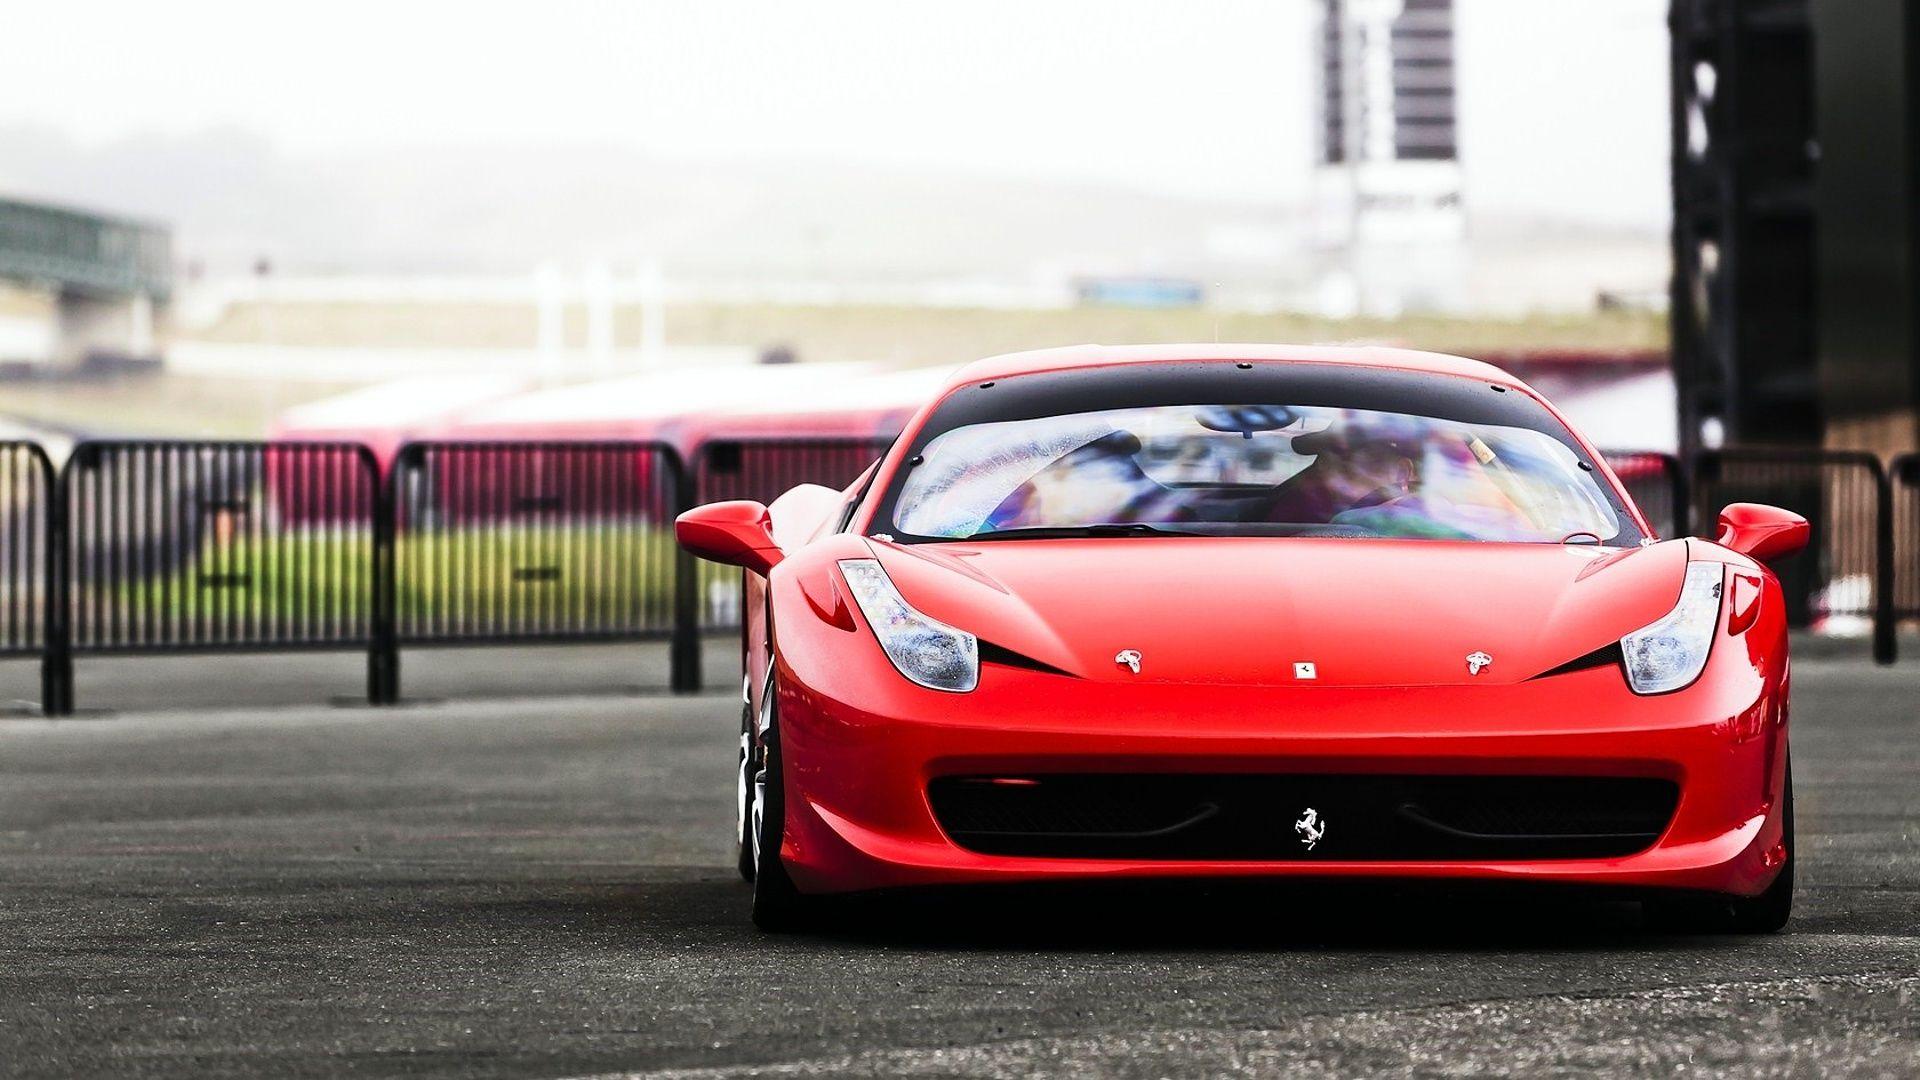 Download Ferrari Cars Full HD Wallpaper Image Wallpaper On